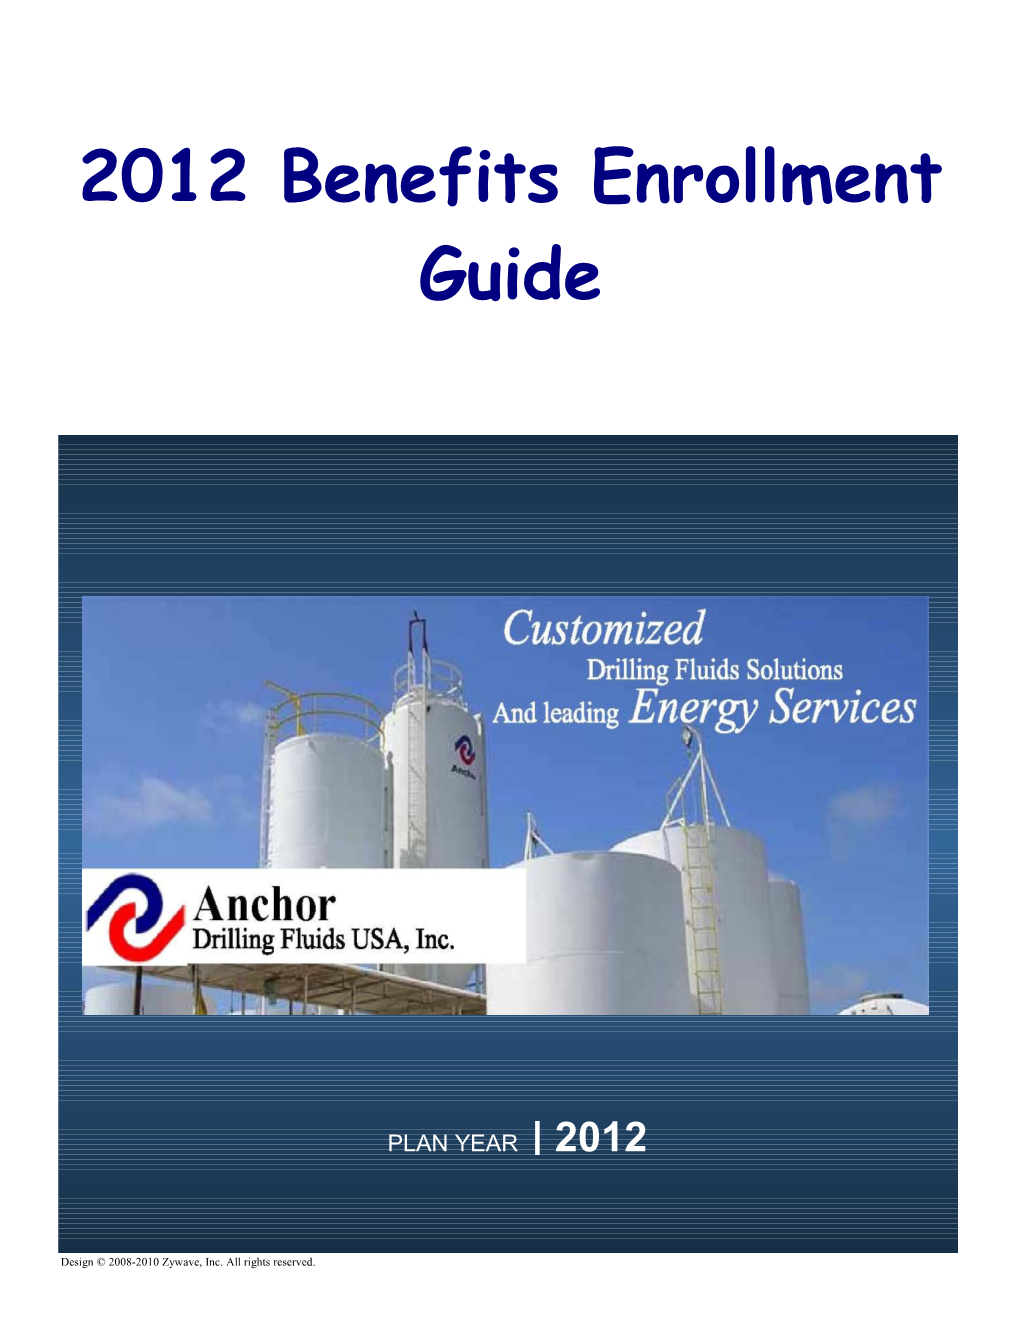 2011 Benefits Enrollment Guide